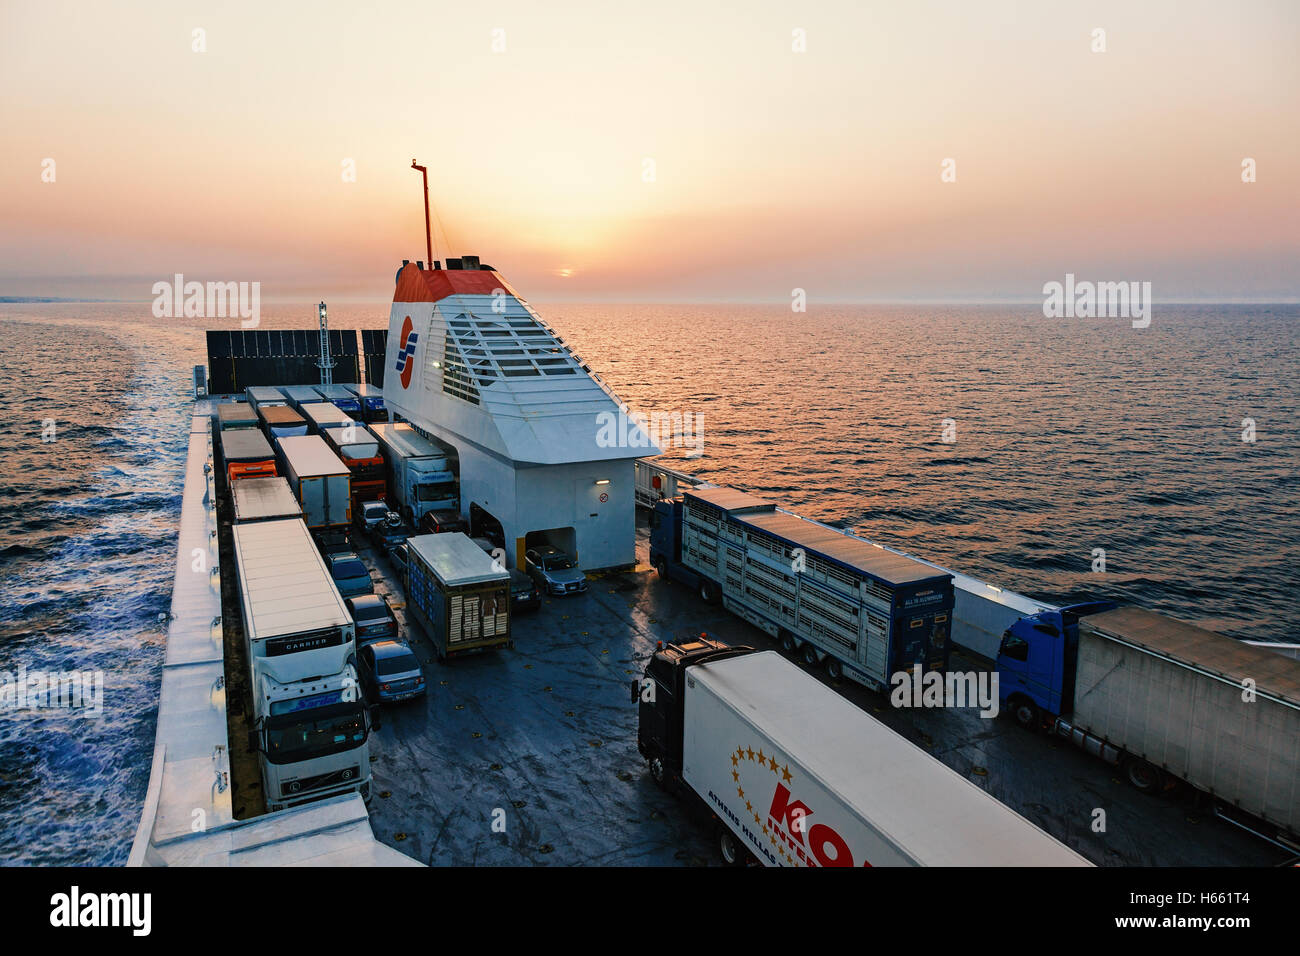 Near Bari, Italy - June 21, 2012: Ferry from Bari, Italy to Corfu, Greece. High angle view. Stock Photo